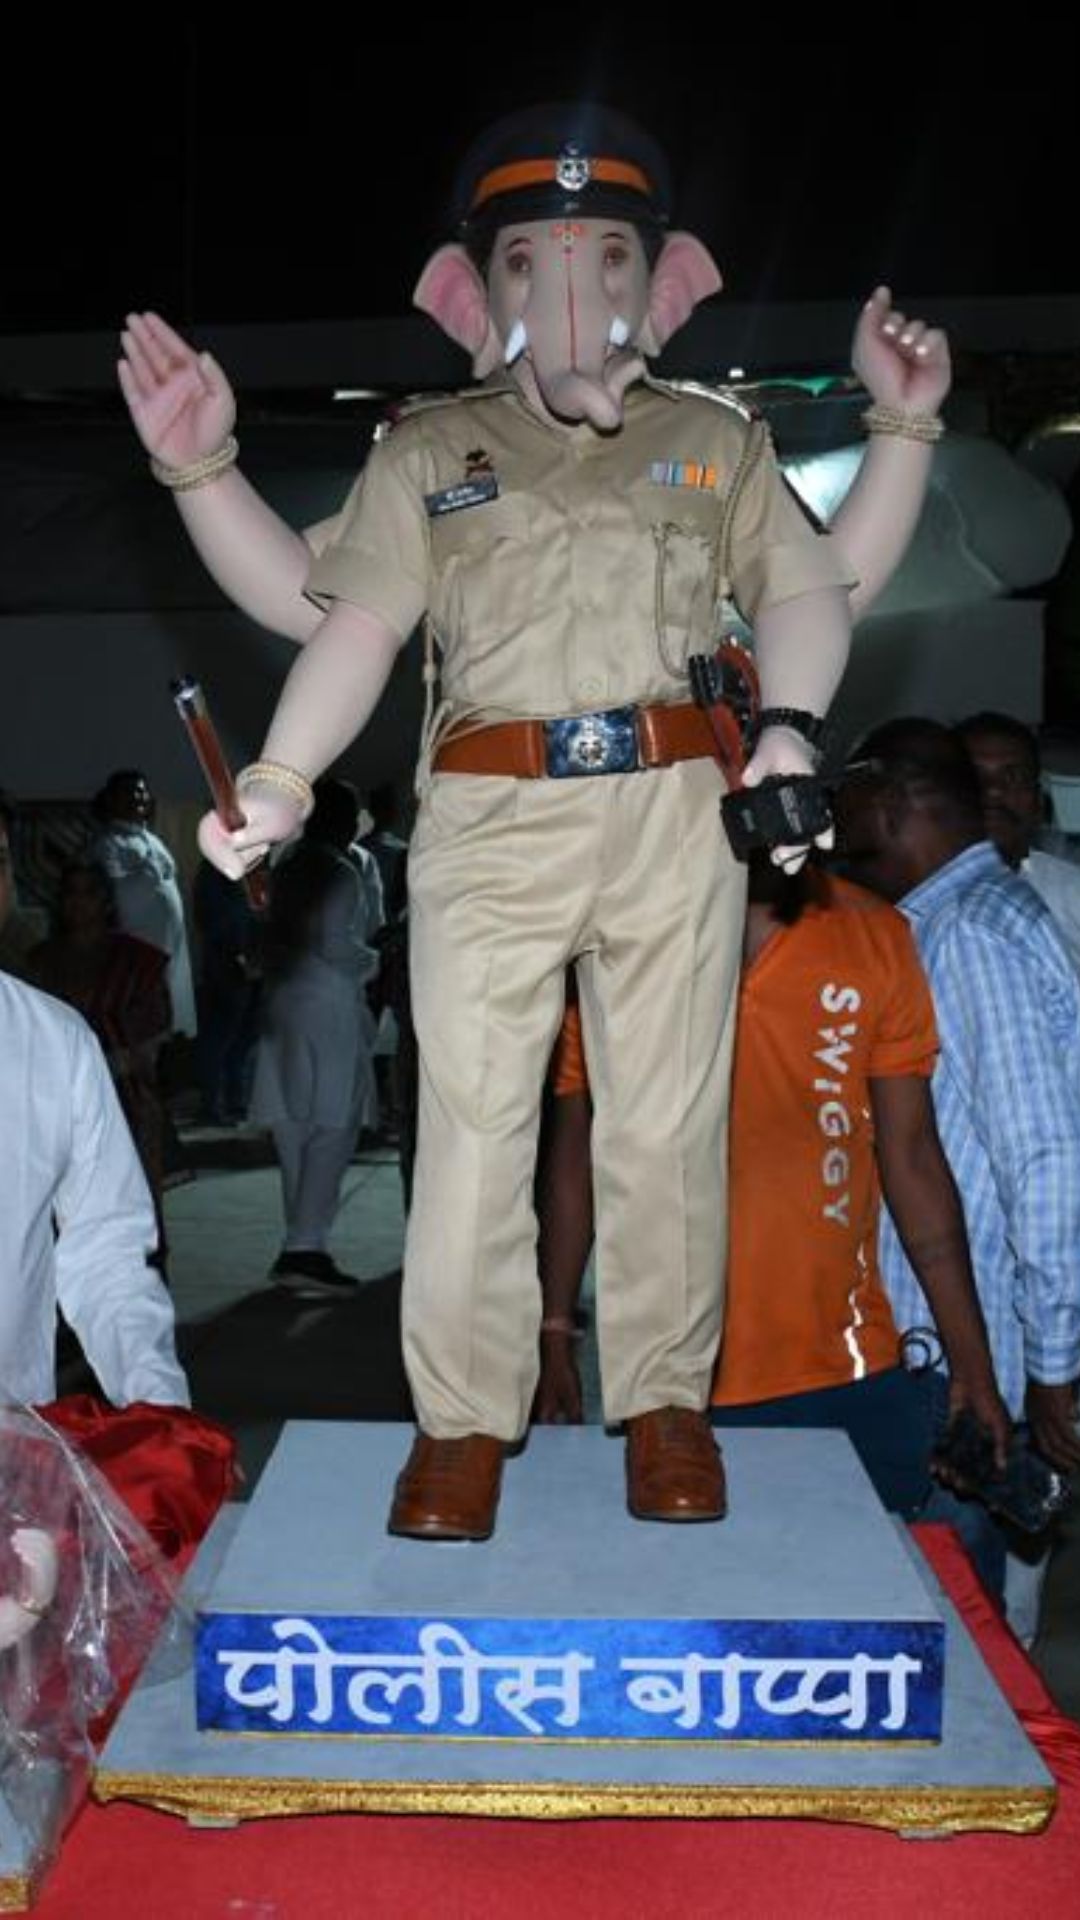 Ganpati Bappa disguised as a police officer in Mumbai, see photos 